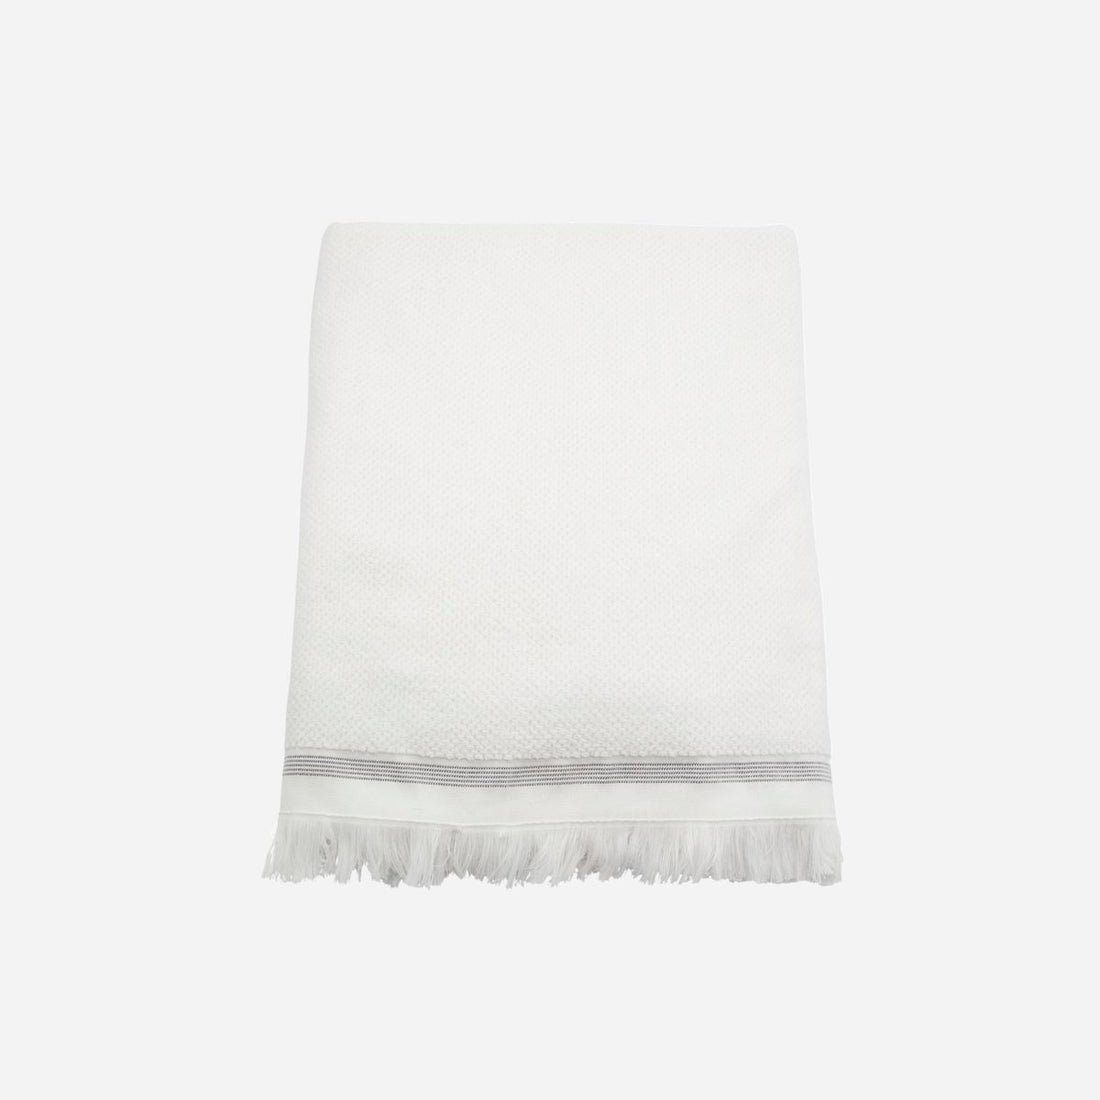 Toalha Meraki, 100x180 cm, branca com listras cinza-l: 100 cm, W: 180 cm